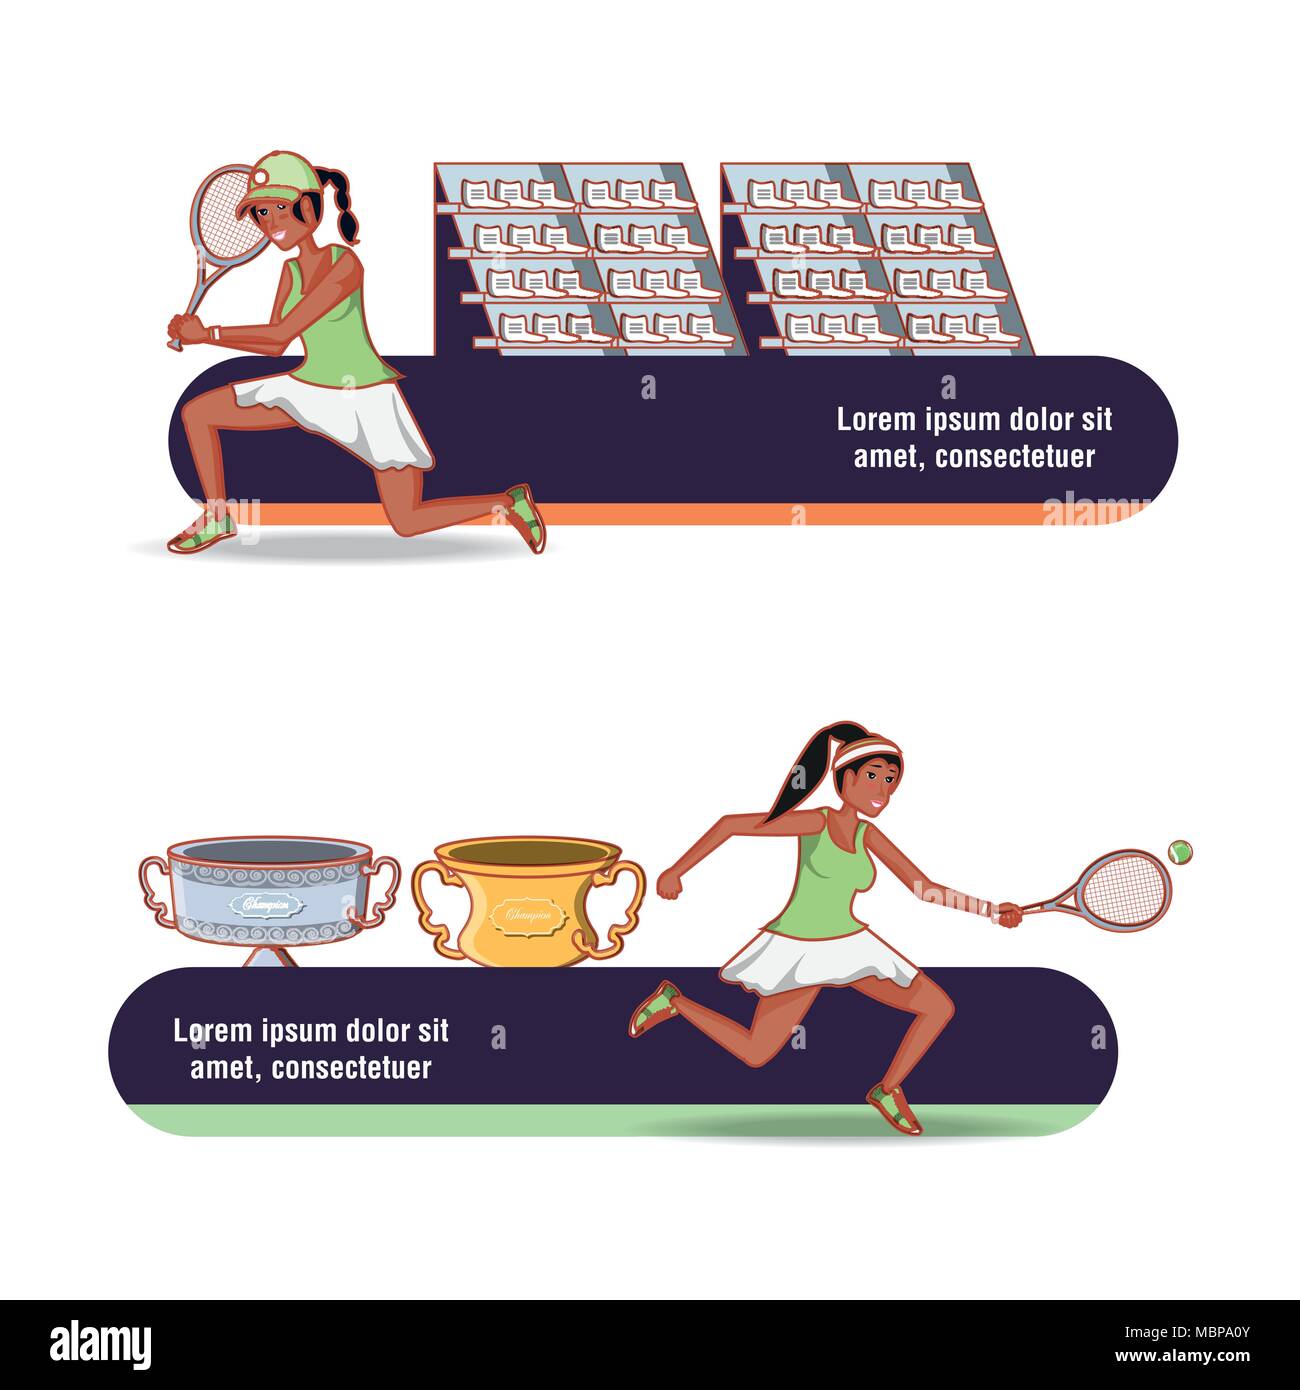 Donne giocando a tennis caratteri illustrazione vettoriale design Illustrazione Vettoriale